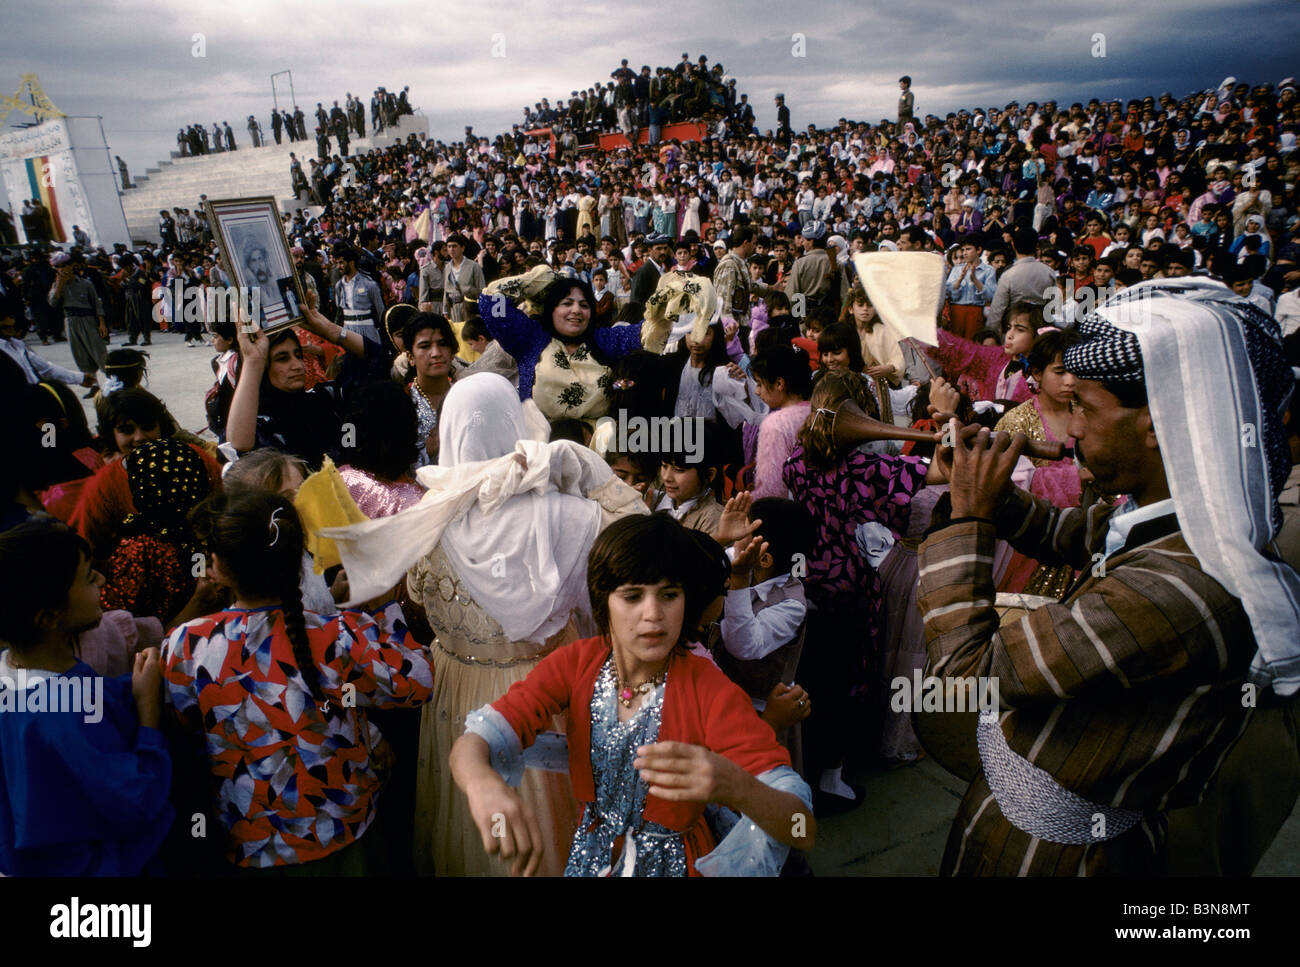 KURDISTAN', NORTHER IRAQ: CROWD SCENE AT THE RALLY FOR MASOUD BARZANI AT THE FOOTBAL STADIUM IN DAHUK, OCTOBER 1991 Stock Photo